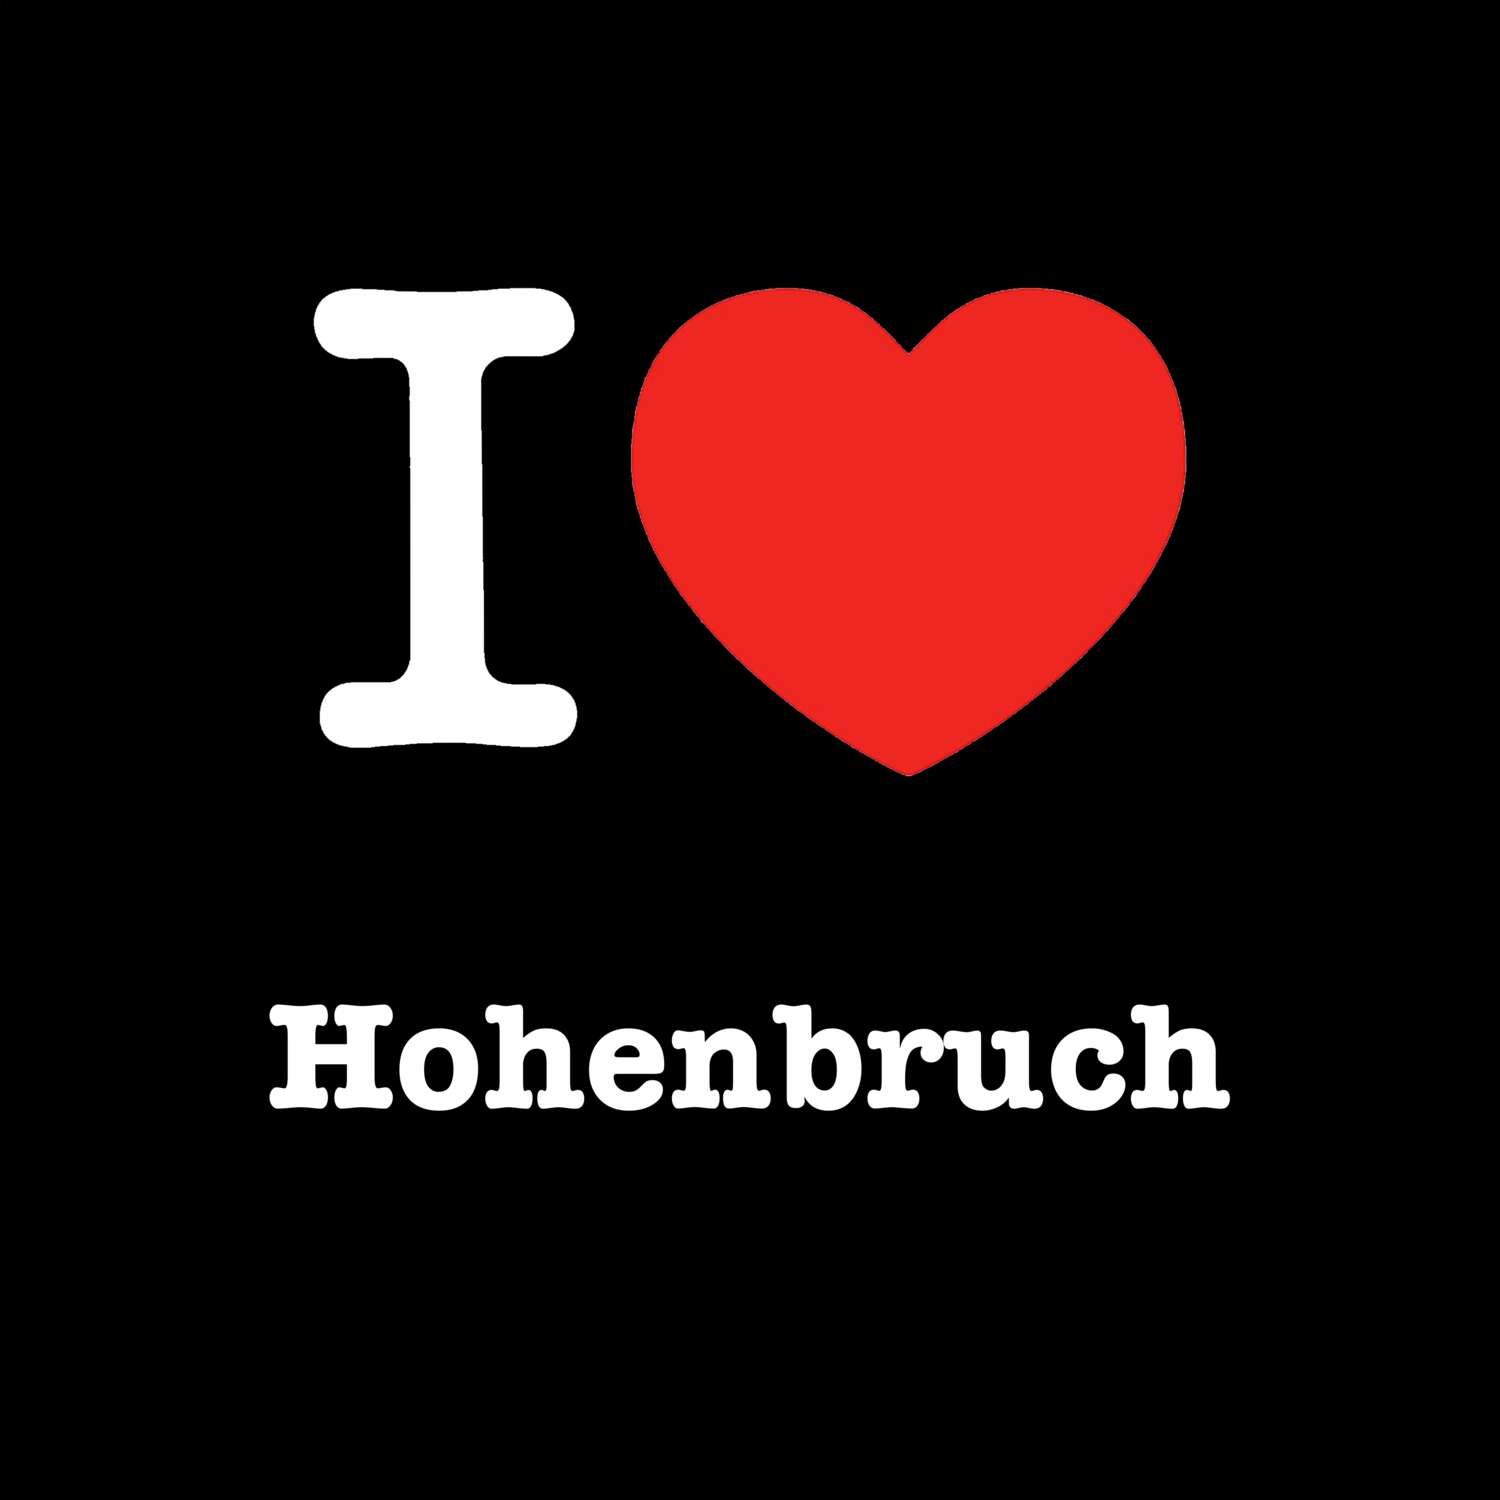 Hohenbruch T-Shirt »I love«